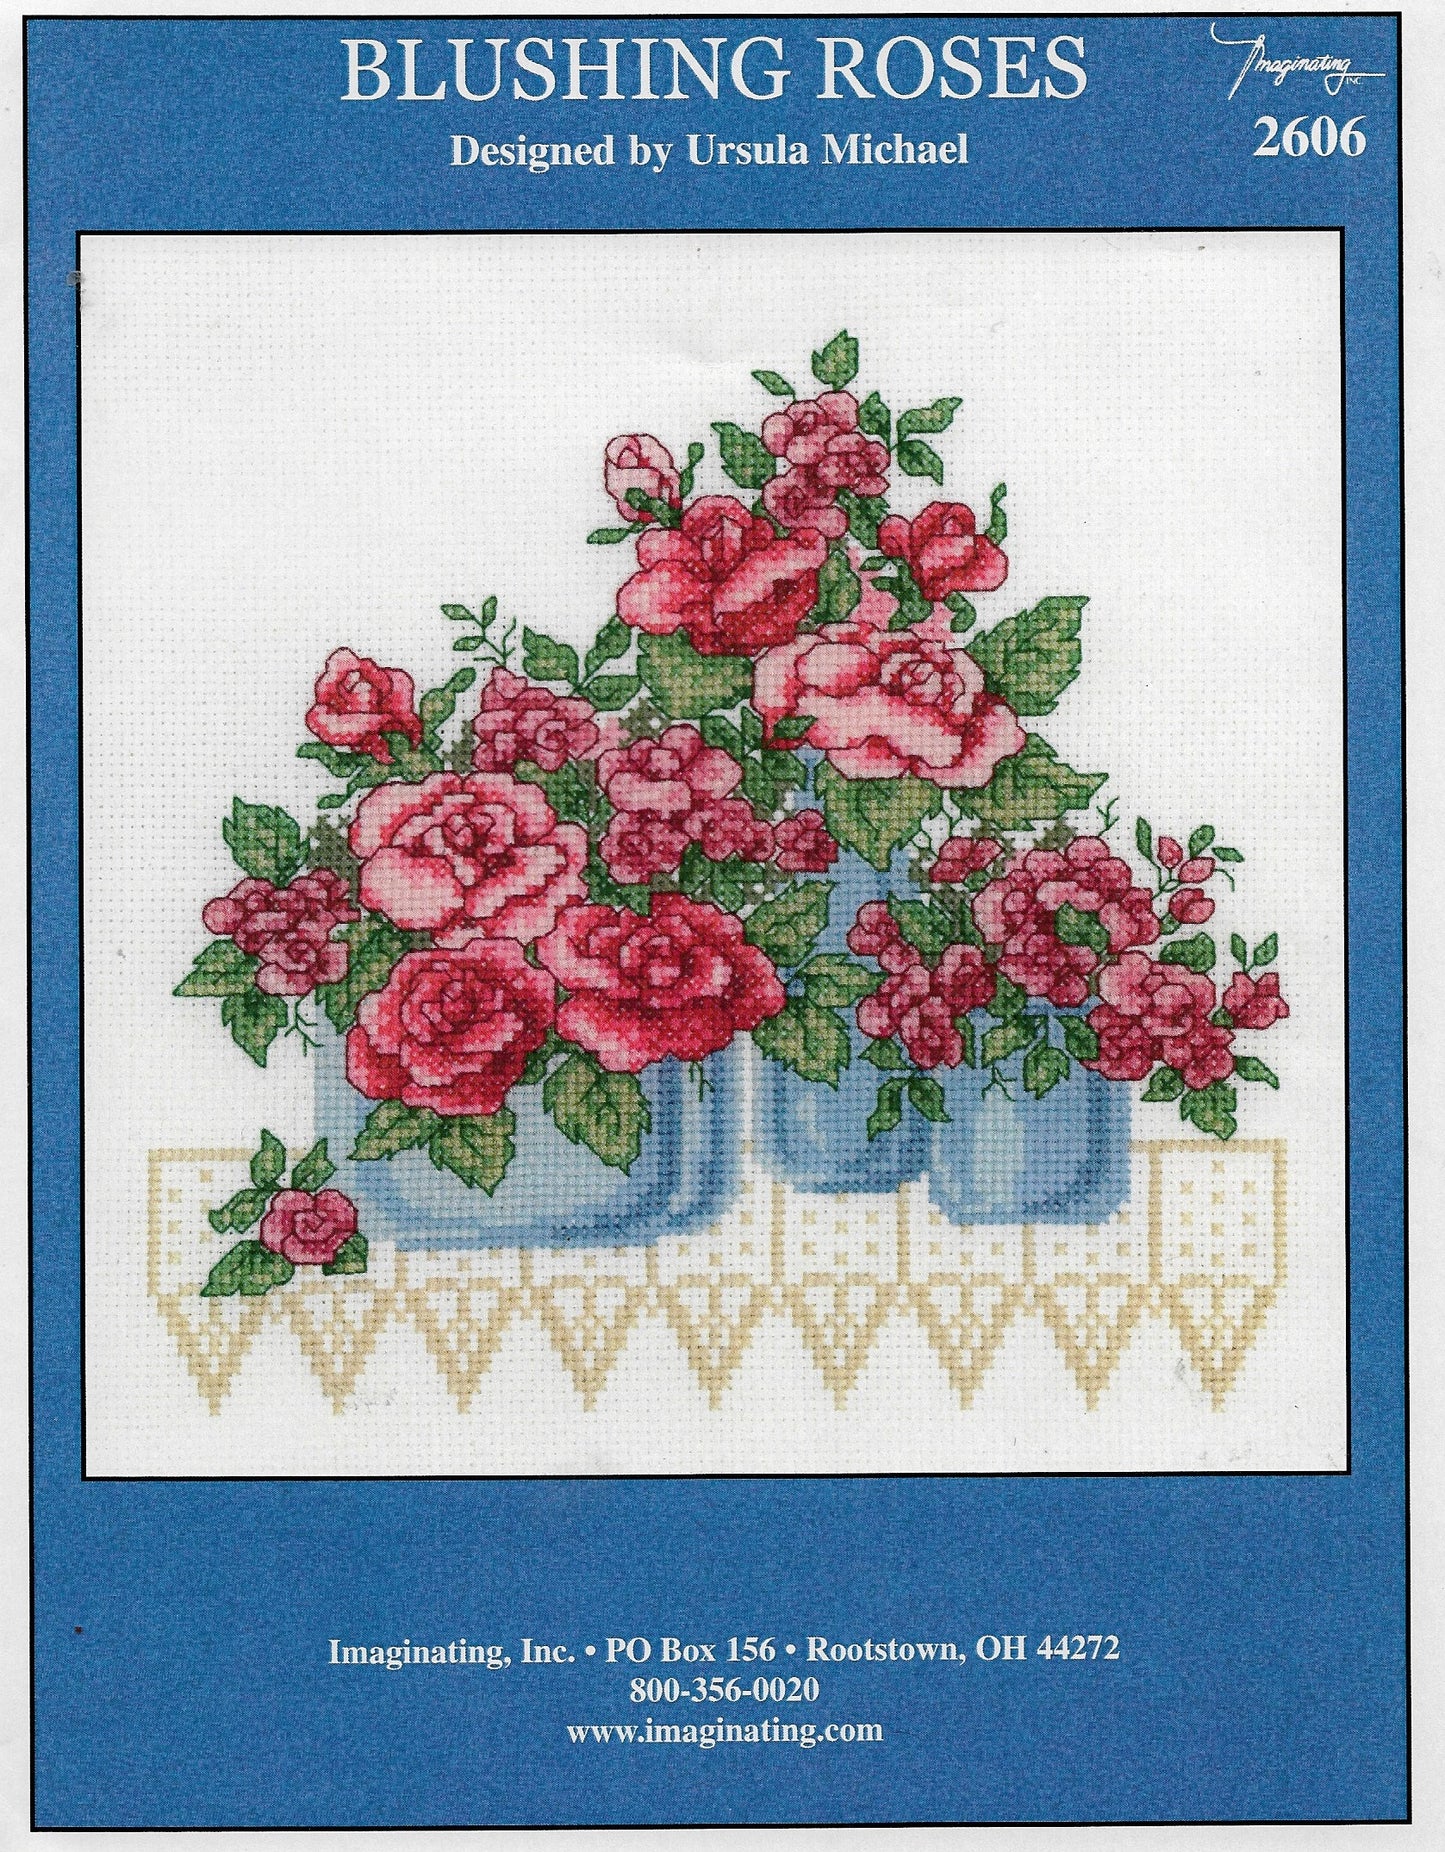 Imaginating Blushing Roses cross stitch pattern